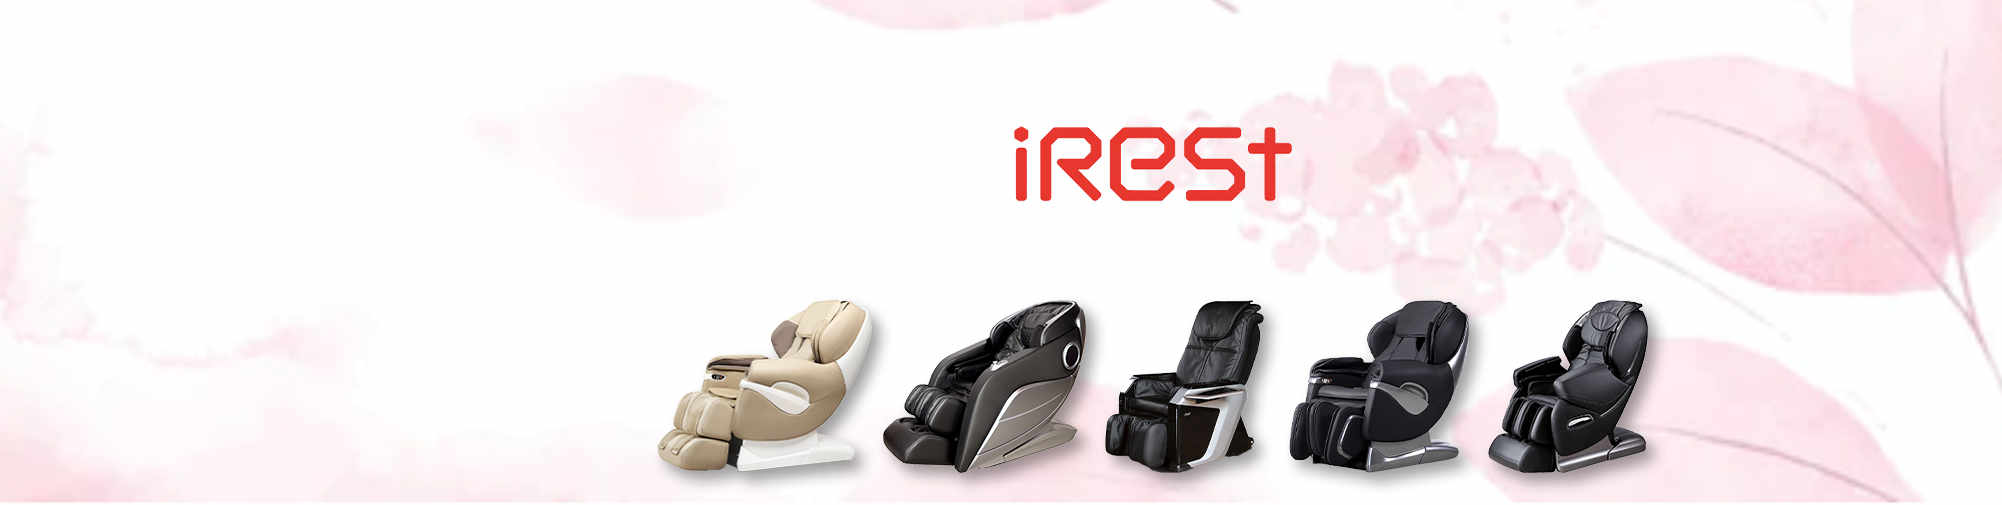 iRest - یک نفس هوای تازه برای بازار صندلی ماساژ | ماساژ صندلی جهان